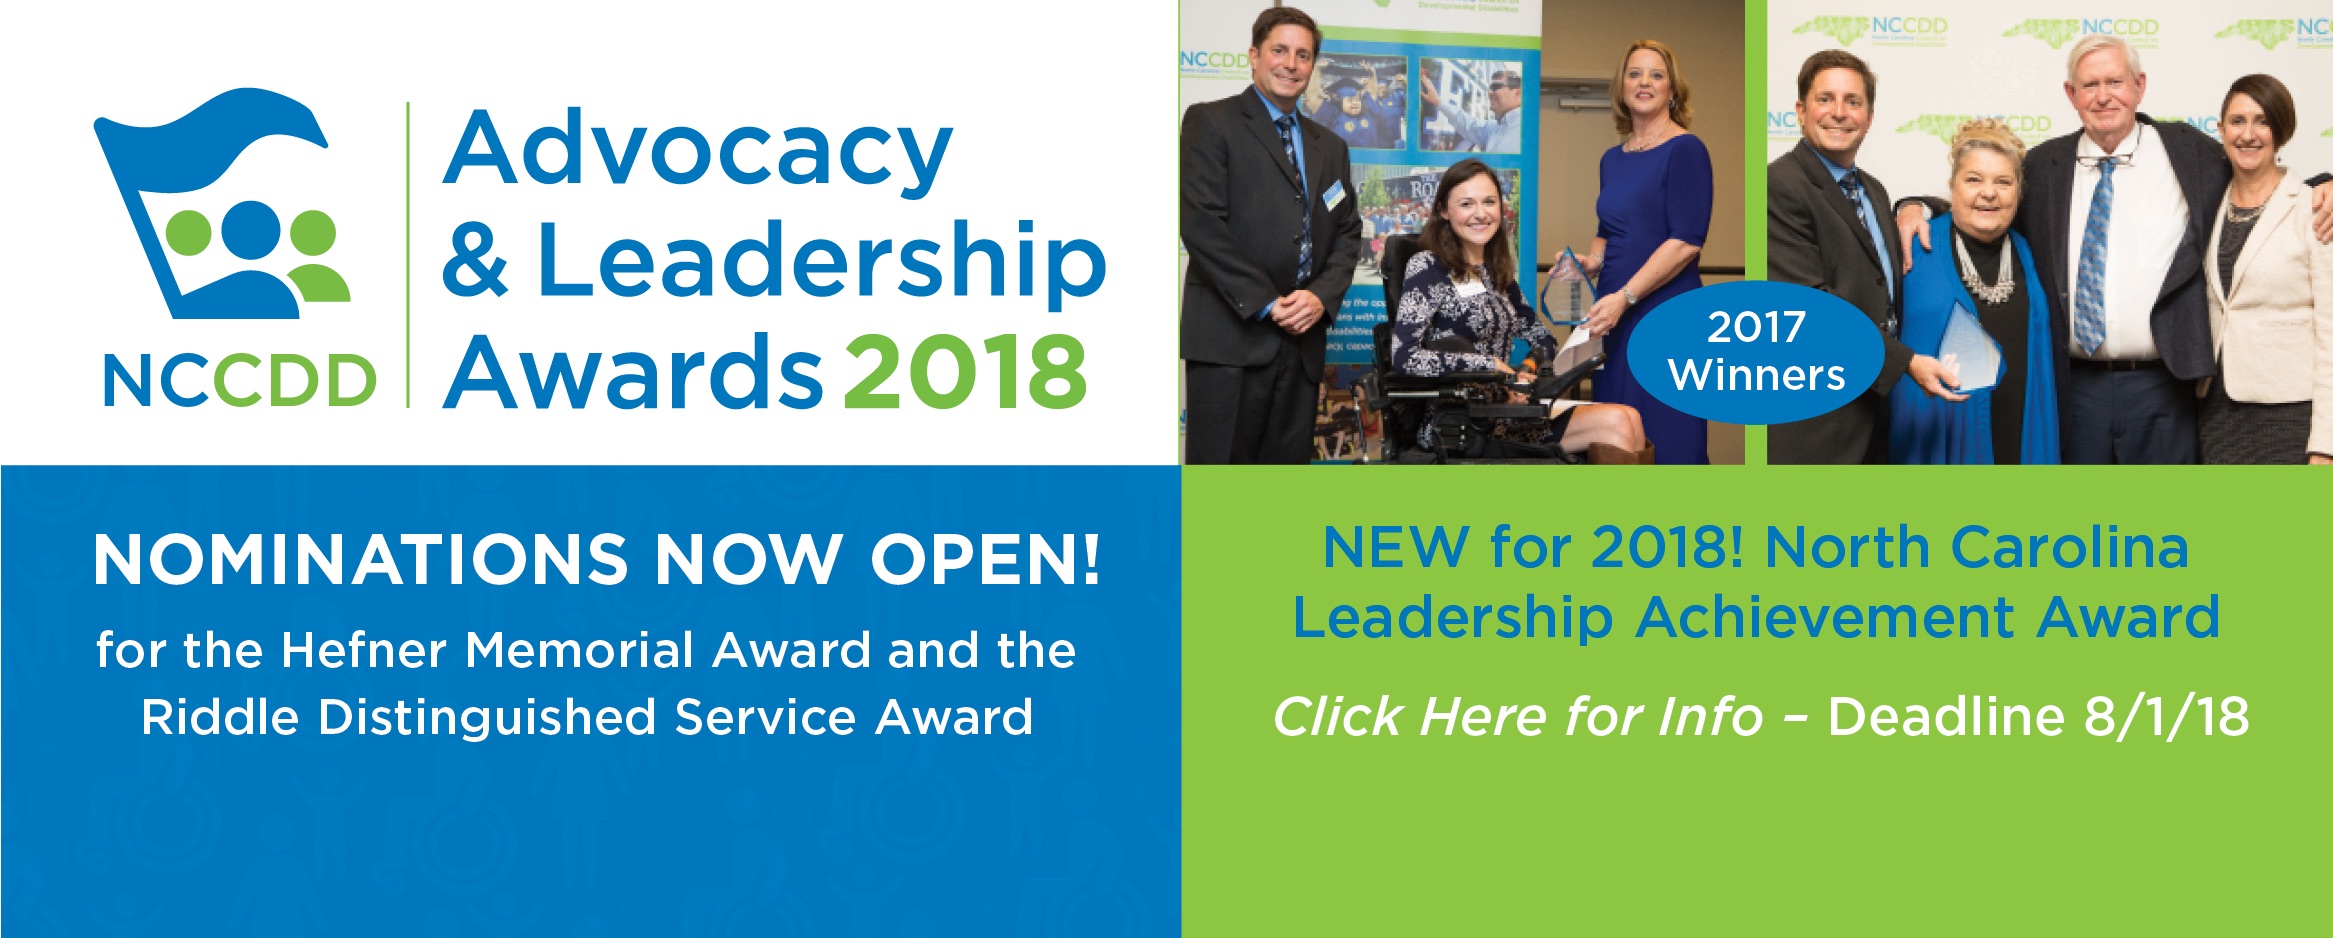 NCCDD Advocacy Leadership Awards 2018